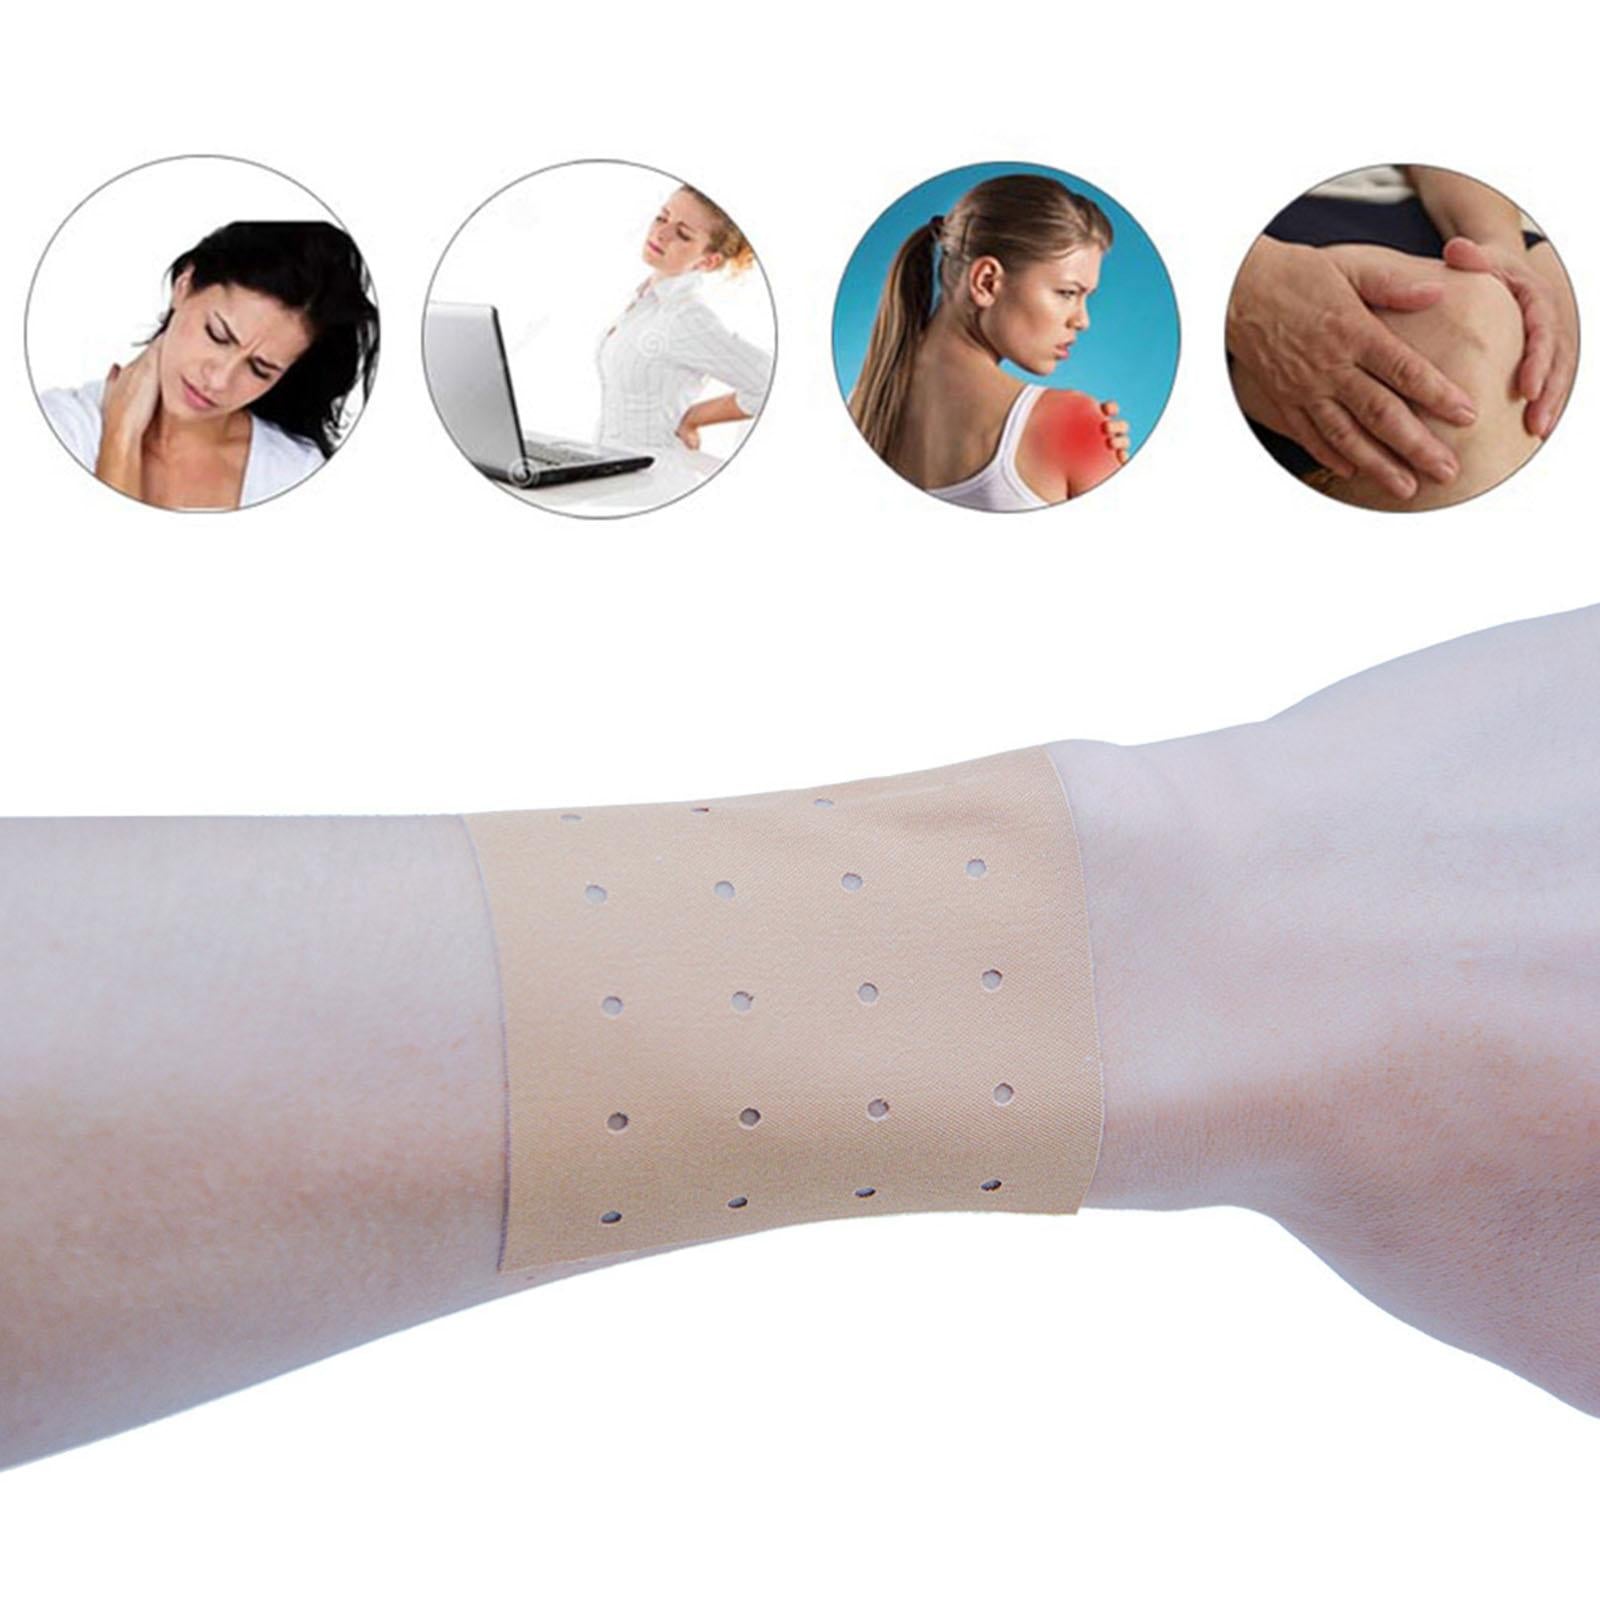 16 Patches Natural Cervical Patch Pain Plaster Sticker for Back Shoulder